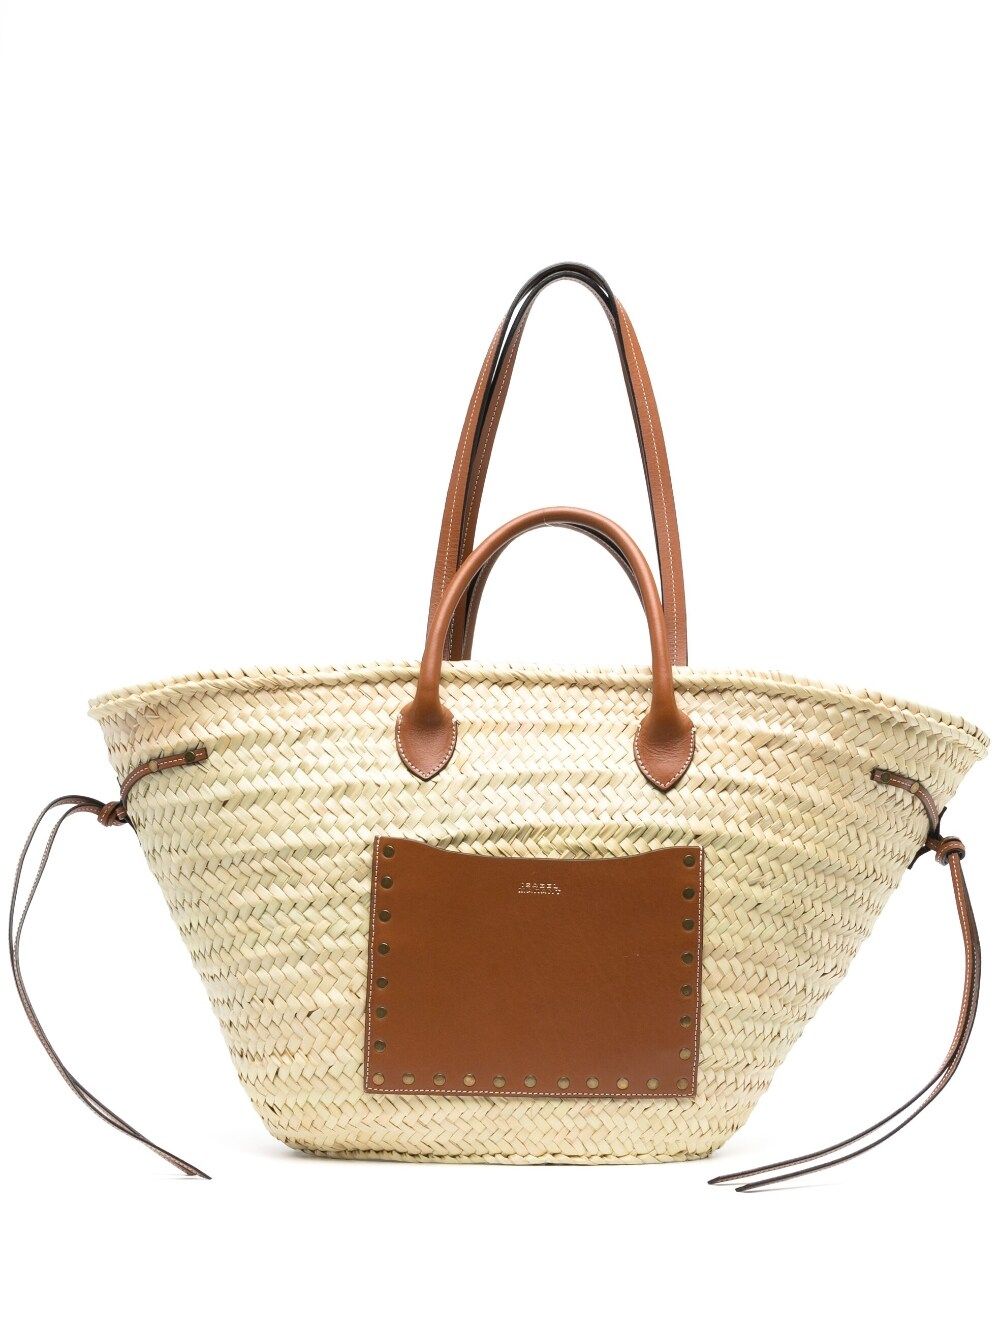 interwoven-design straw beach bag | ISABEL MARANT | Eraldo.com